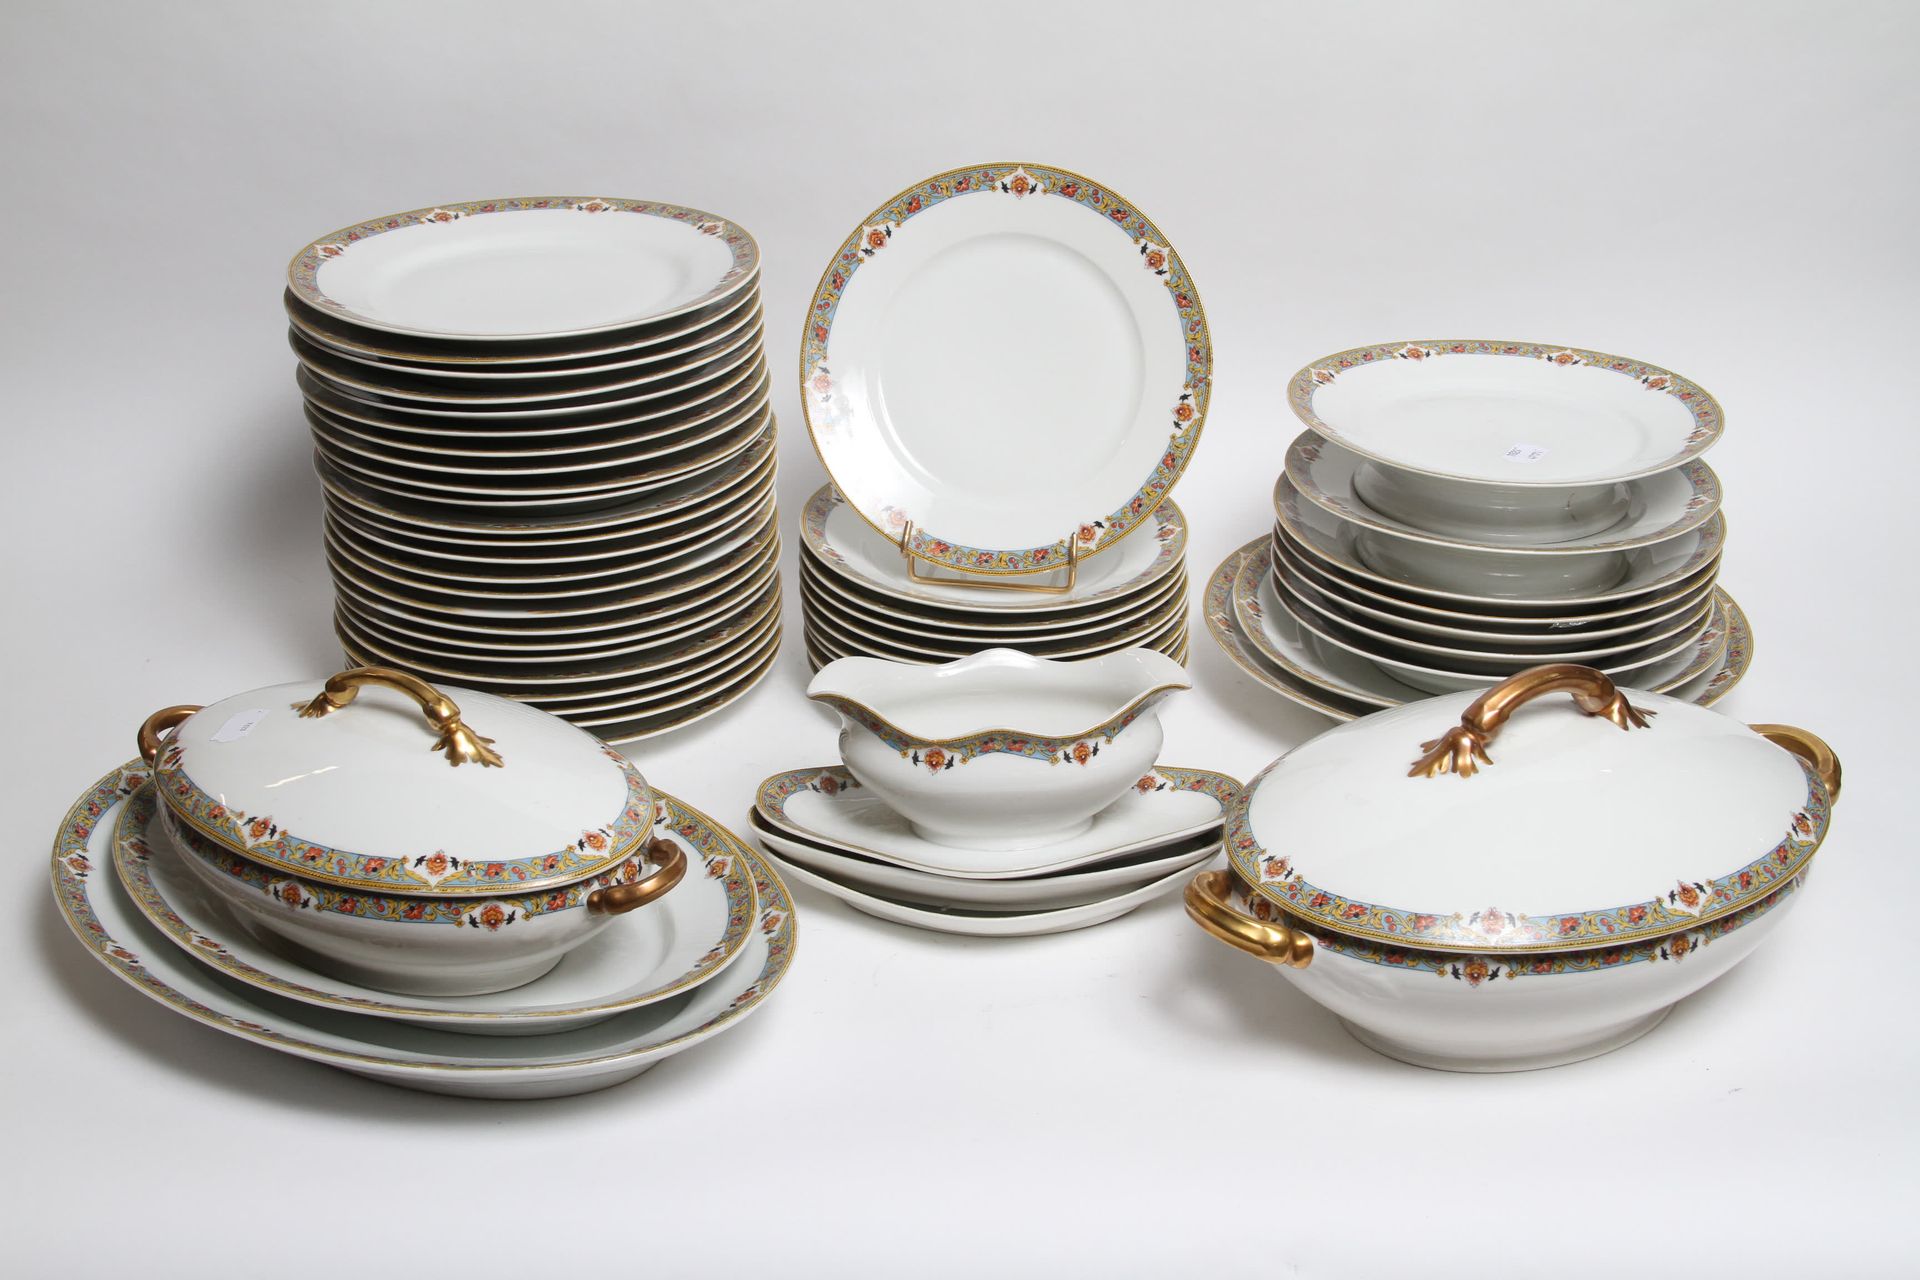 Null 利摩日瓷器晚餐服务的一部分，包括24个餐盘，5个汤盘，2个甜菜盘，2个圆盘，11个甜点盘，2个馄饨，1个酱船，2个椭圆盘，1个蔬菜盘和1个汤锅